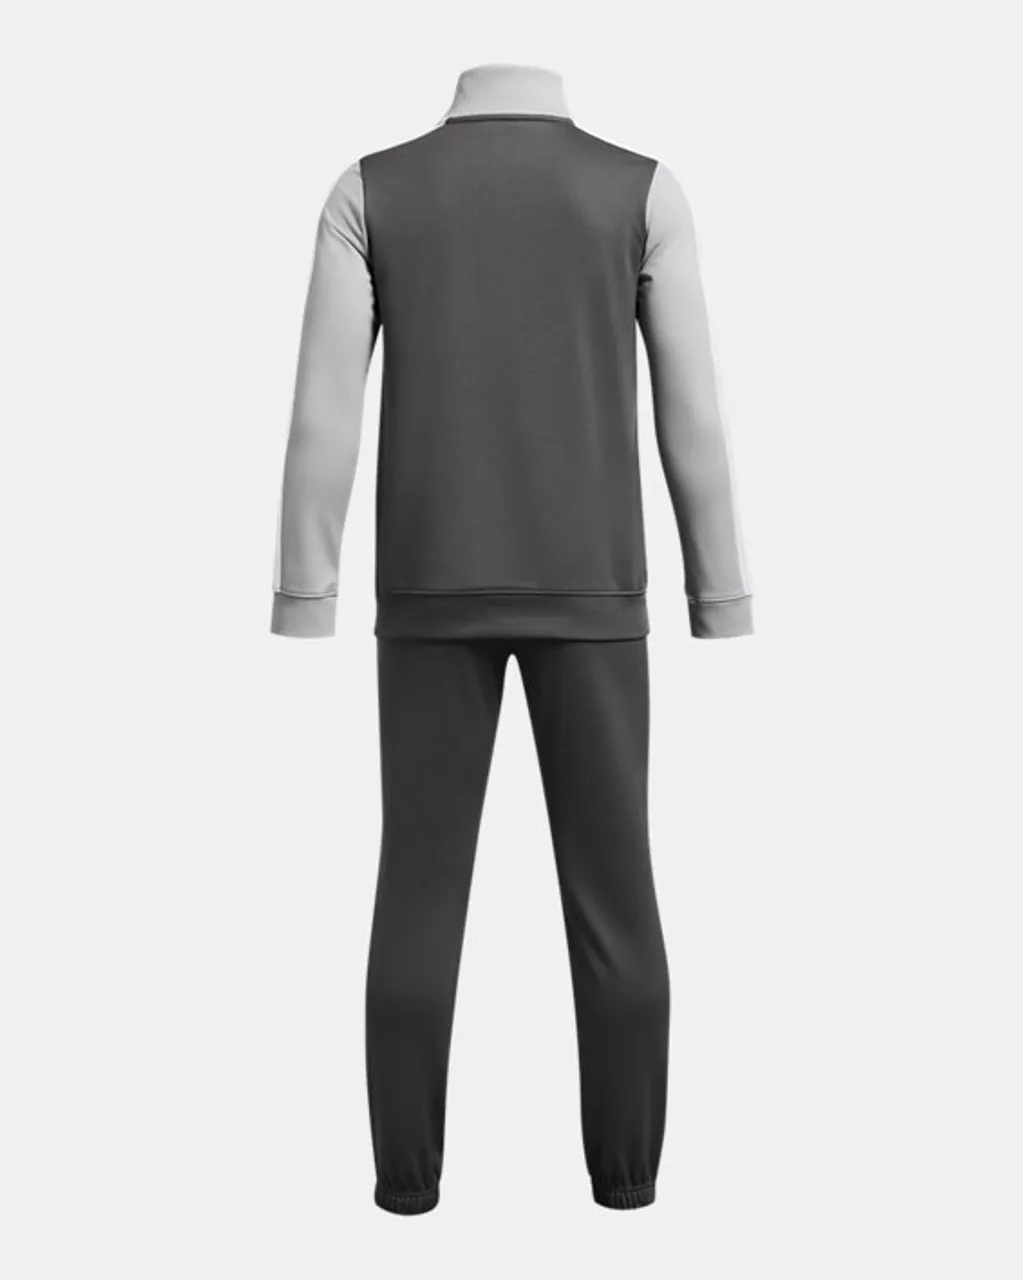 Under Armour Knit Colorblock Trainingsanzug für Jungen Castlerock / Mod Grau / Weiß YSM (127 - 137 cm)